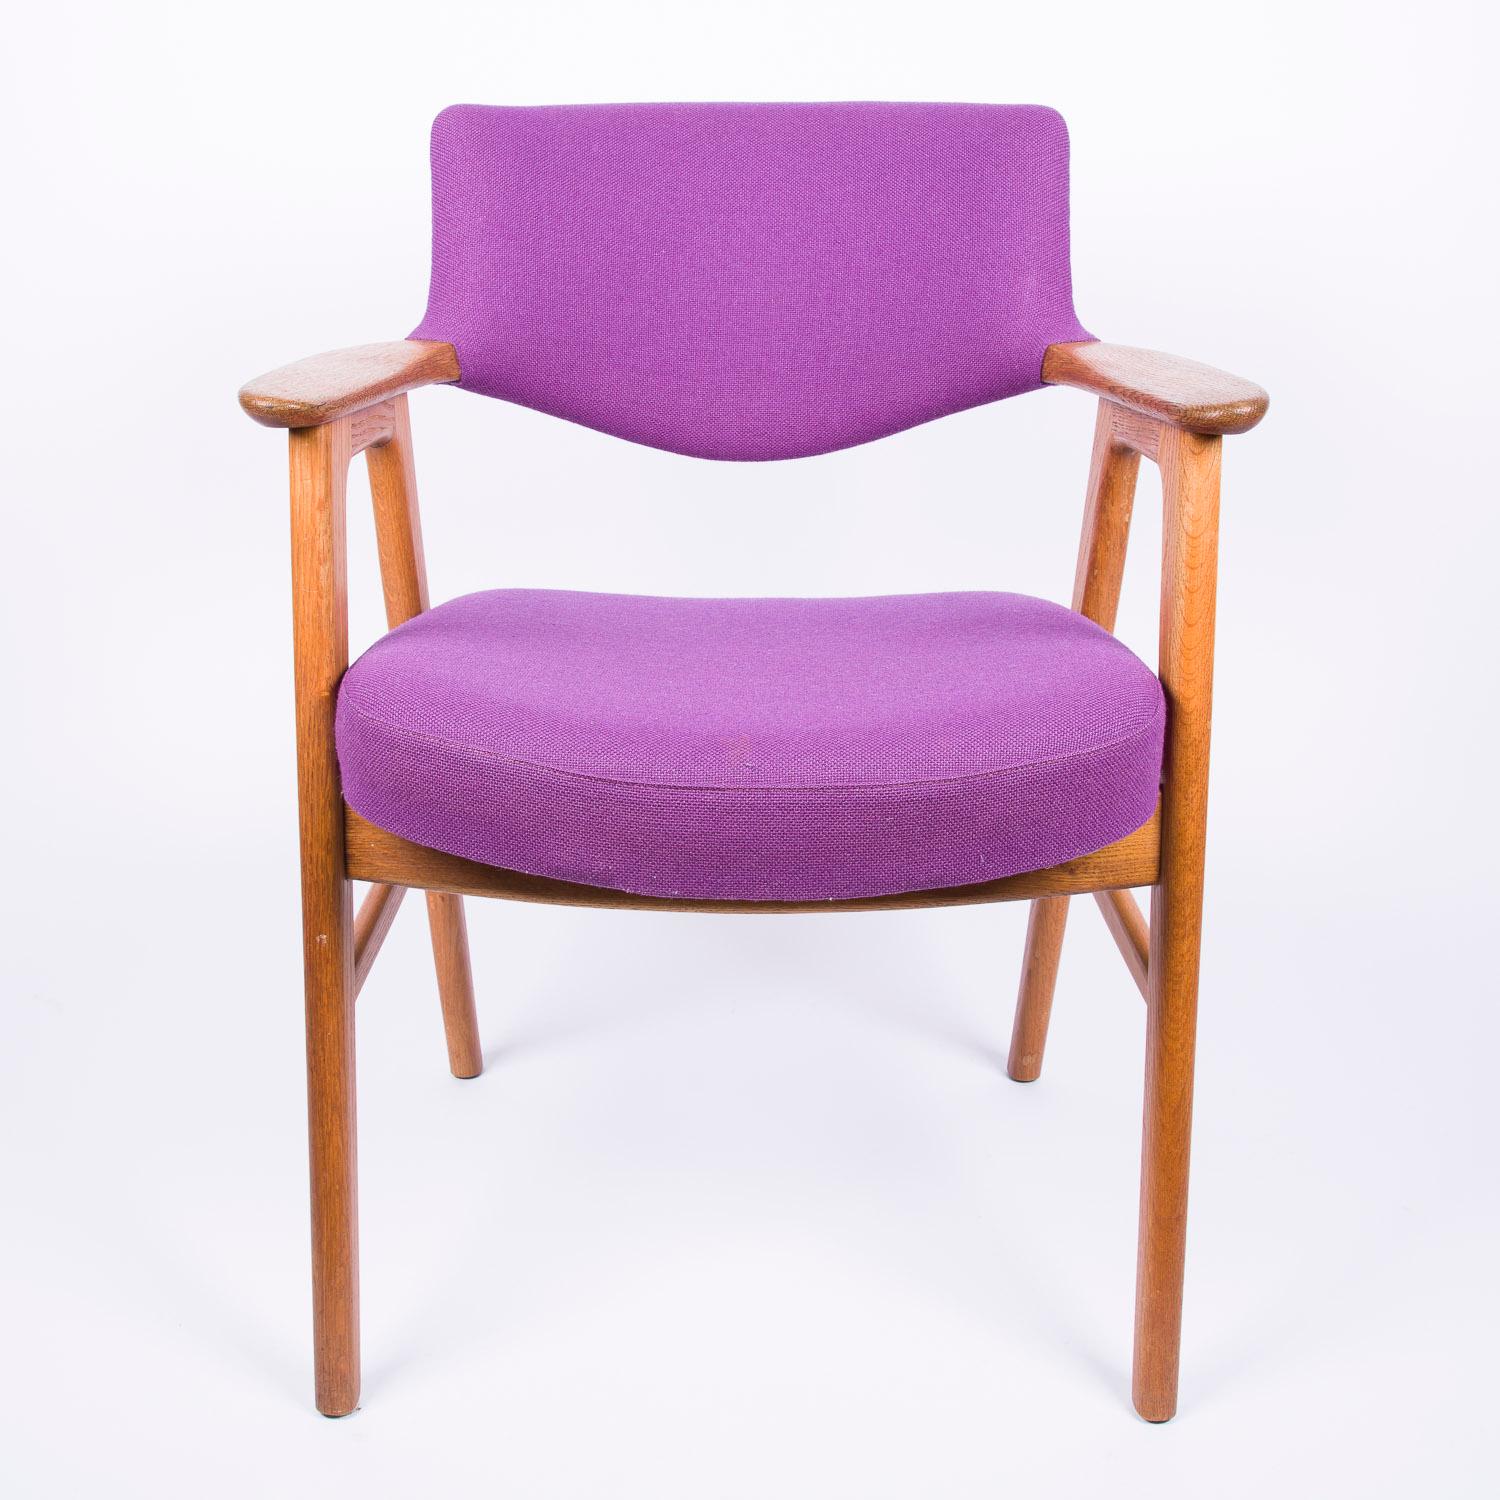 Oak chair by Erik Kierkegaard for Høng Stolefabrik, Denmark, circa 1960.

Original purple wool upholstery.